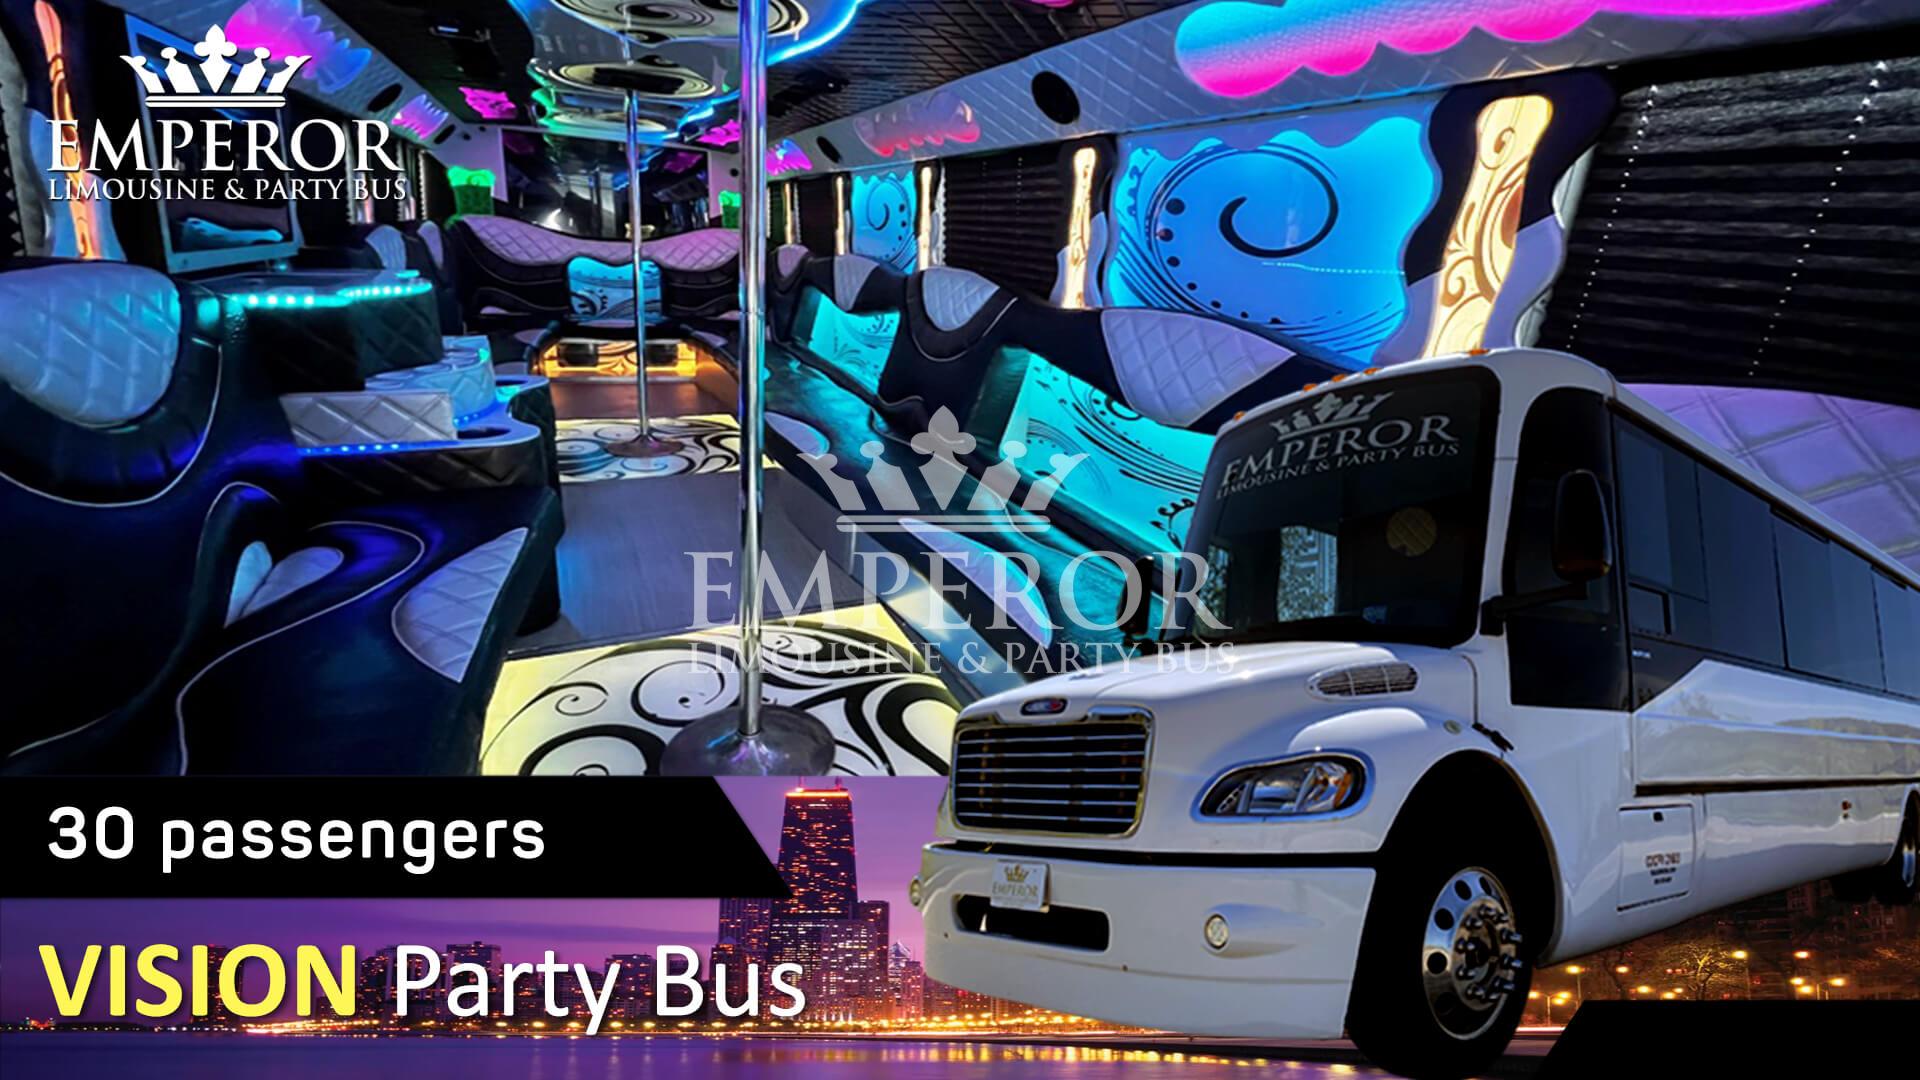 Bachelorette party bus for rent - Vision Edition